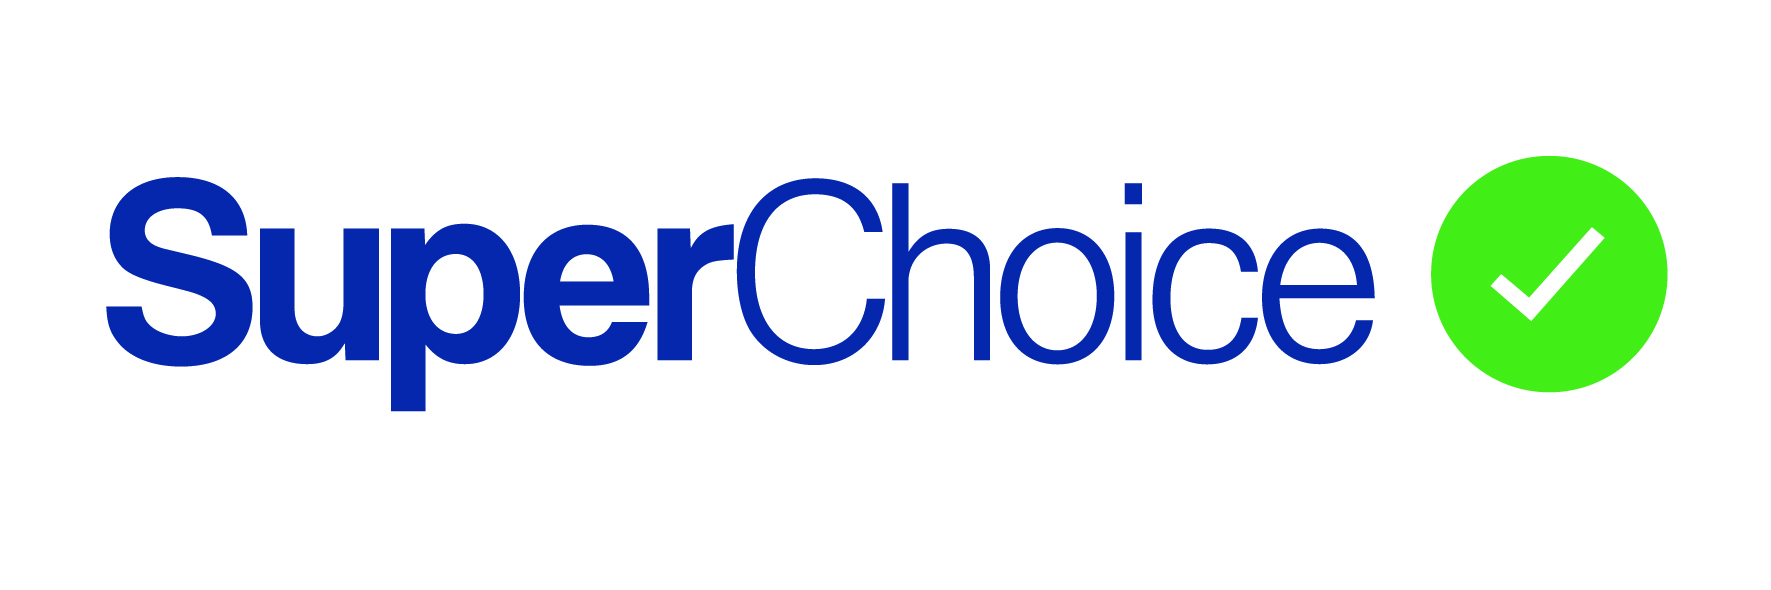 SuperChoice Services Help Center home page